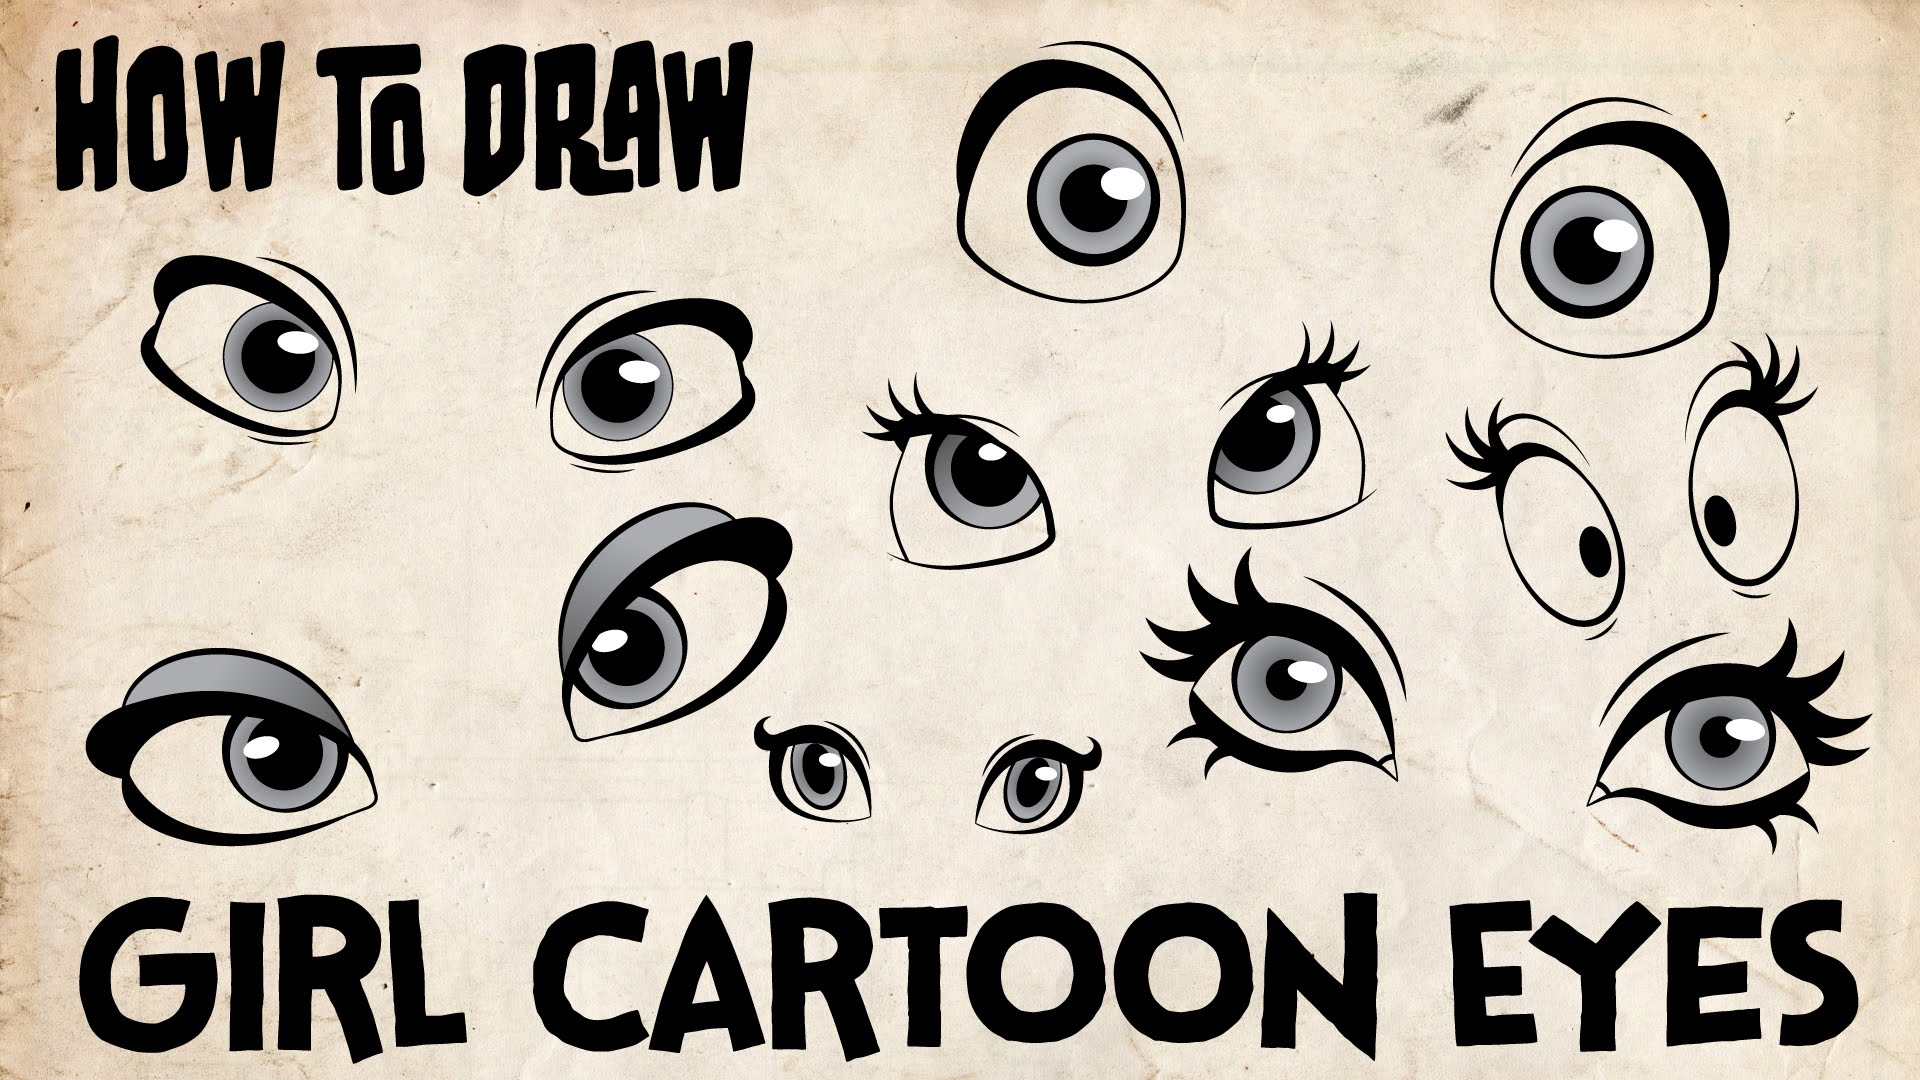 How to Draw Girl Cartoon Eyes - YouTube